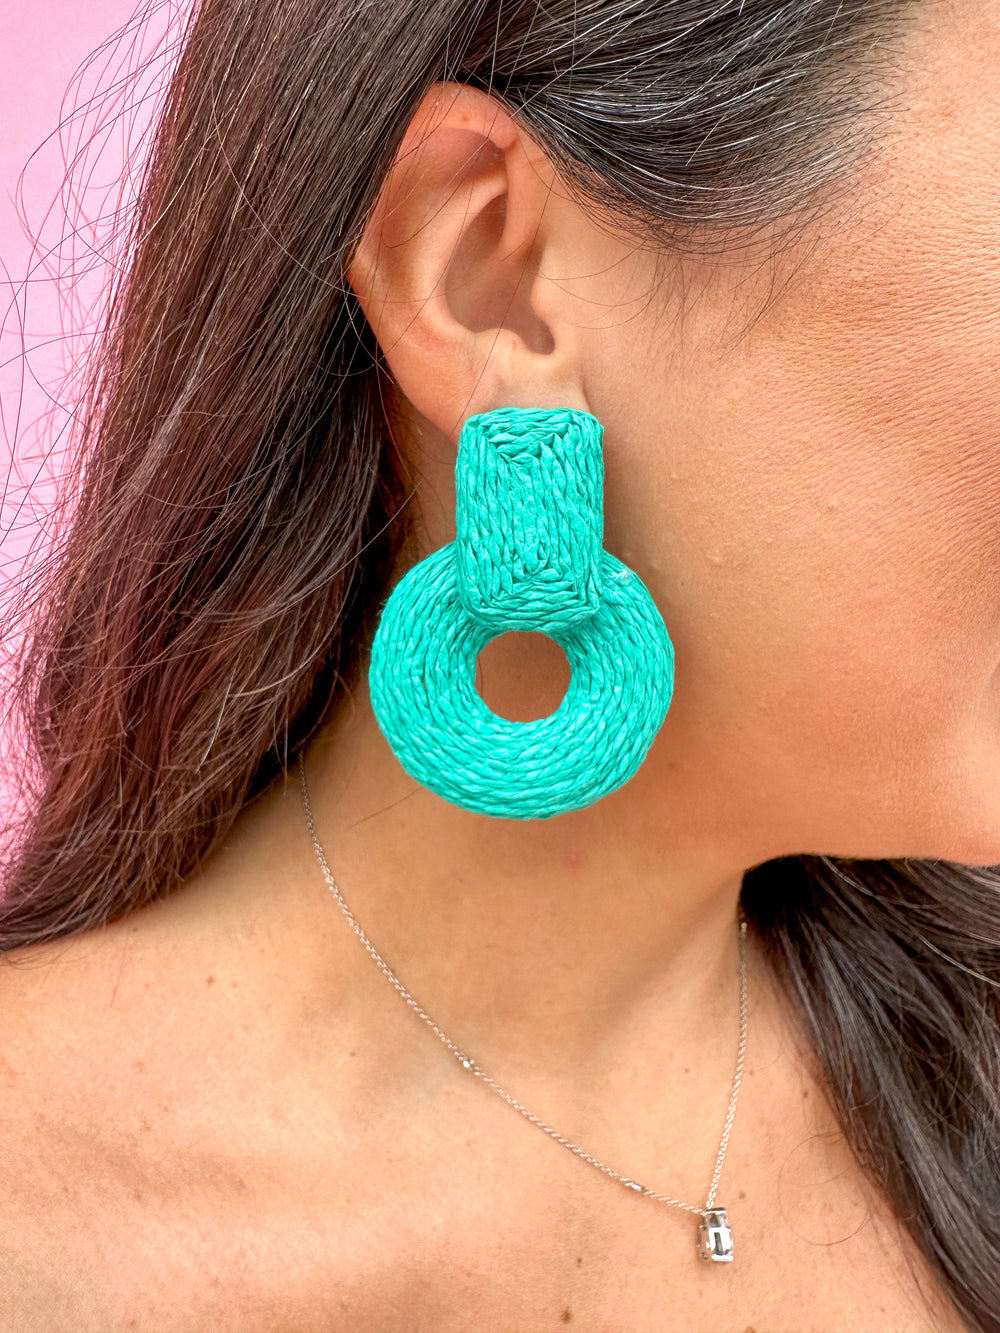 Unspoken Moment Earrings - Turquoise